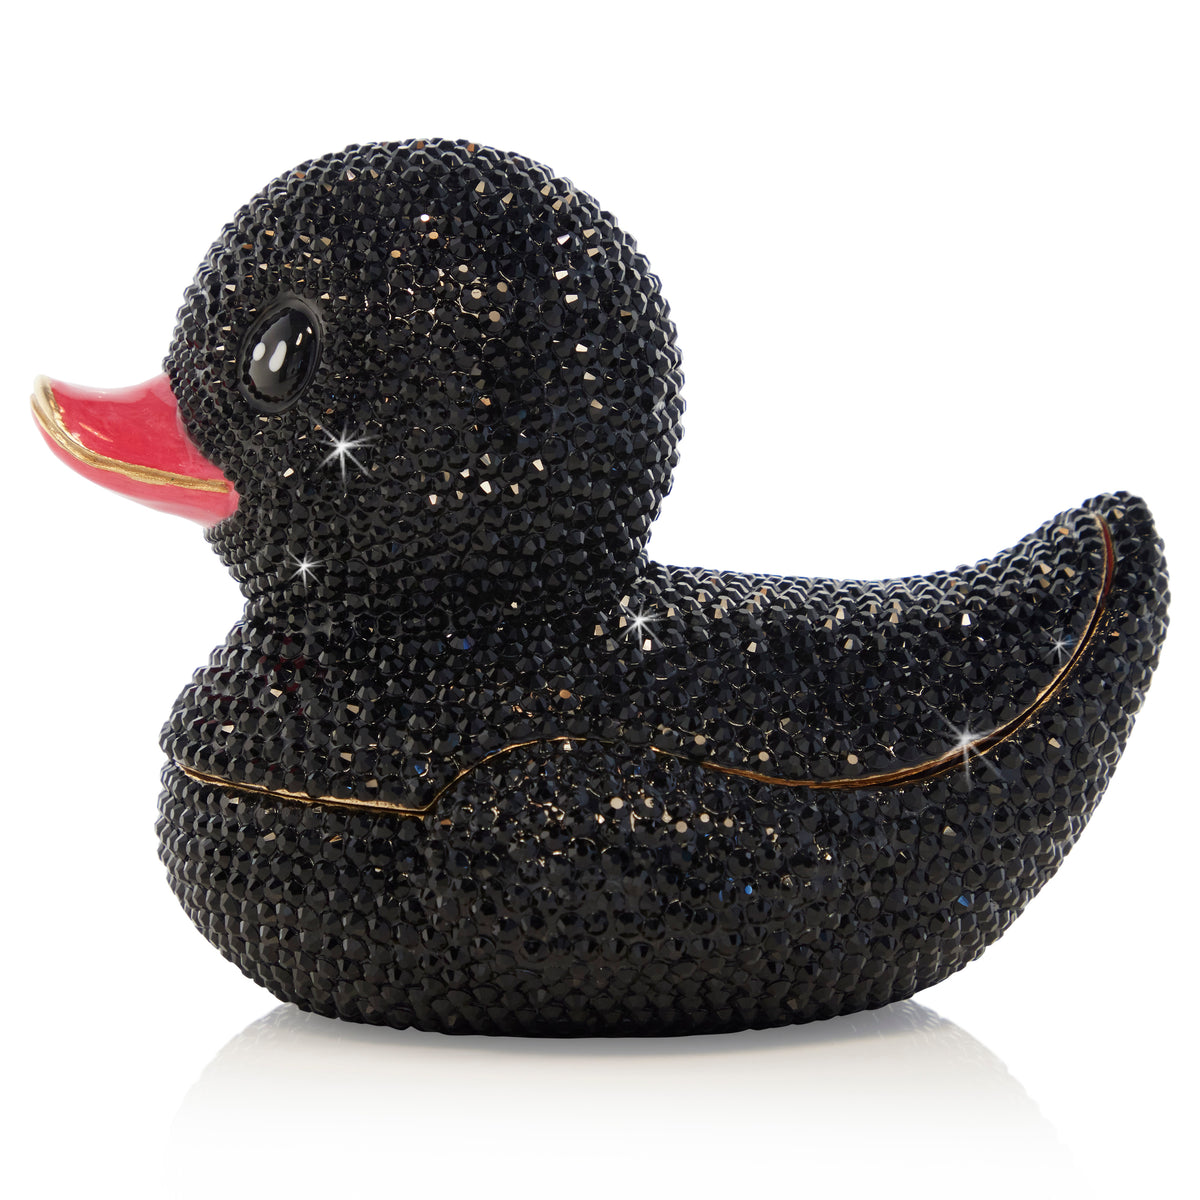 Cubaris sp. 'rubber ducky' black velvet choker